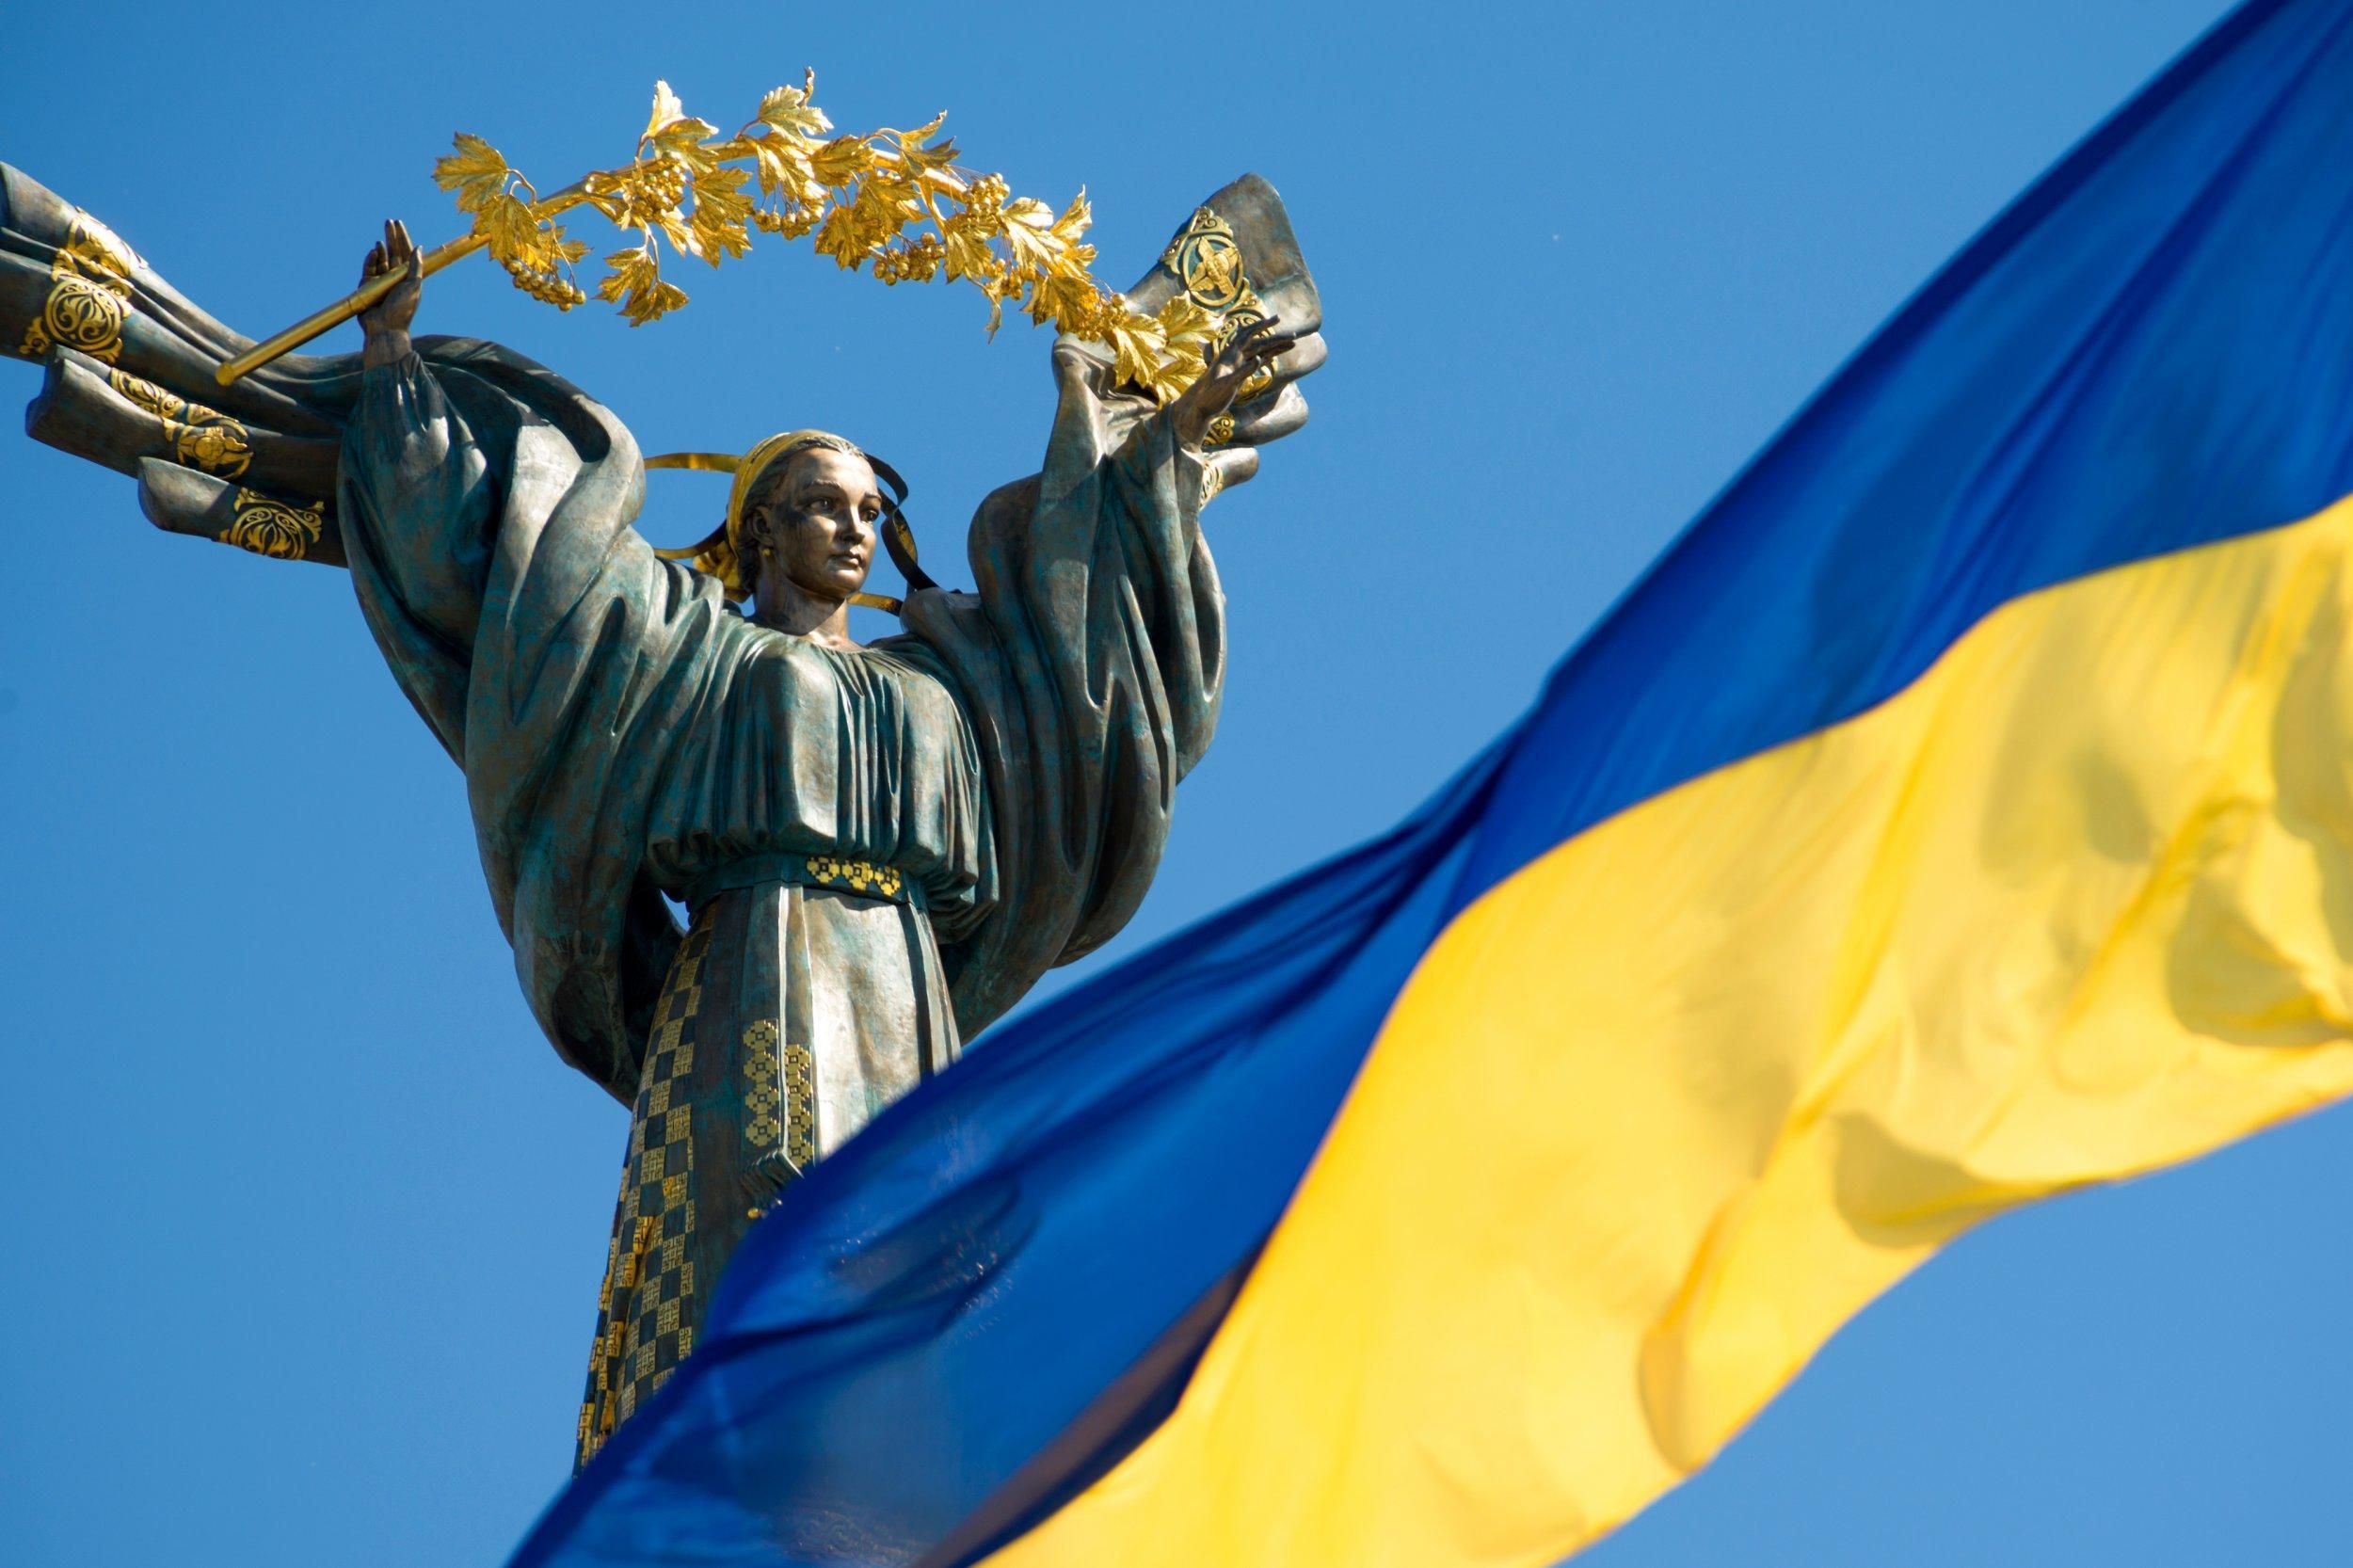 "Я залишаюсь": українці запустили патріотичний флешмоб - Україна новини - 24 Канал